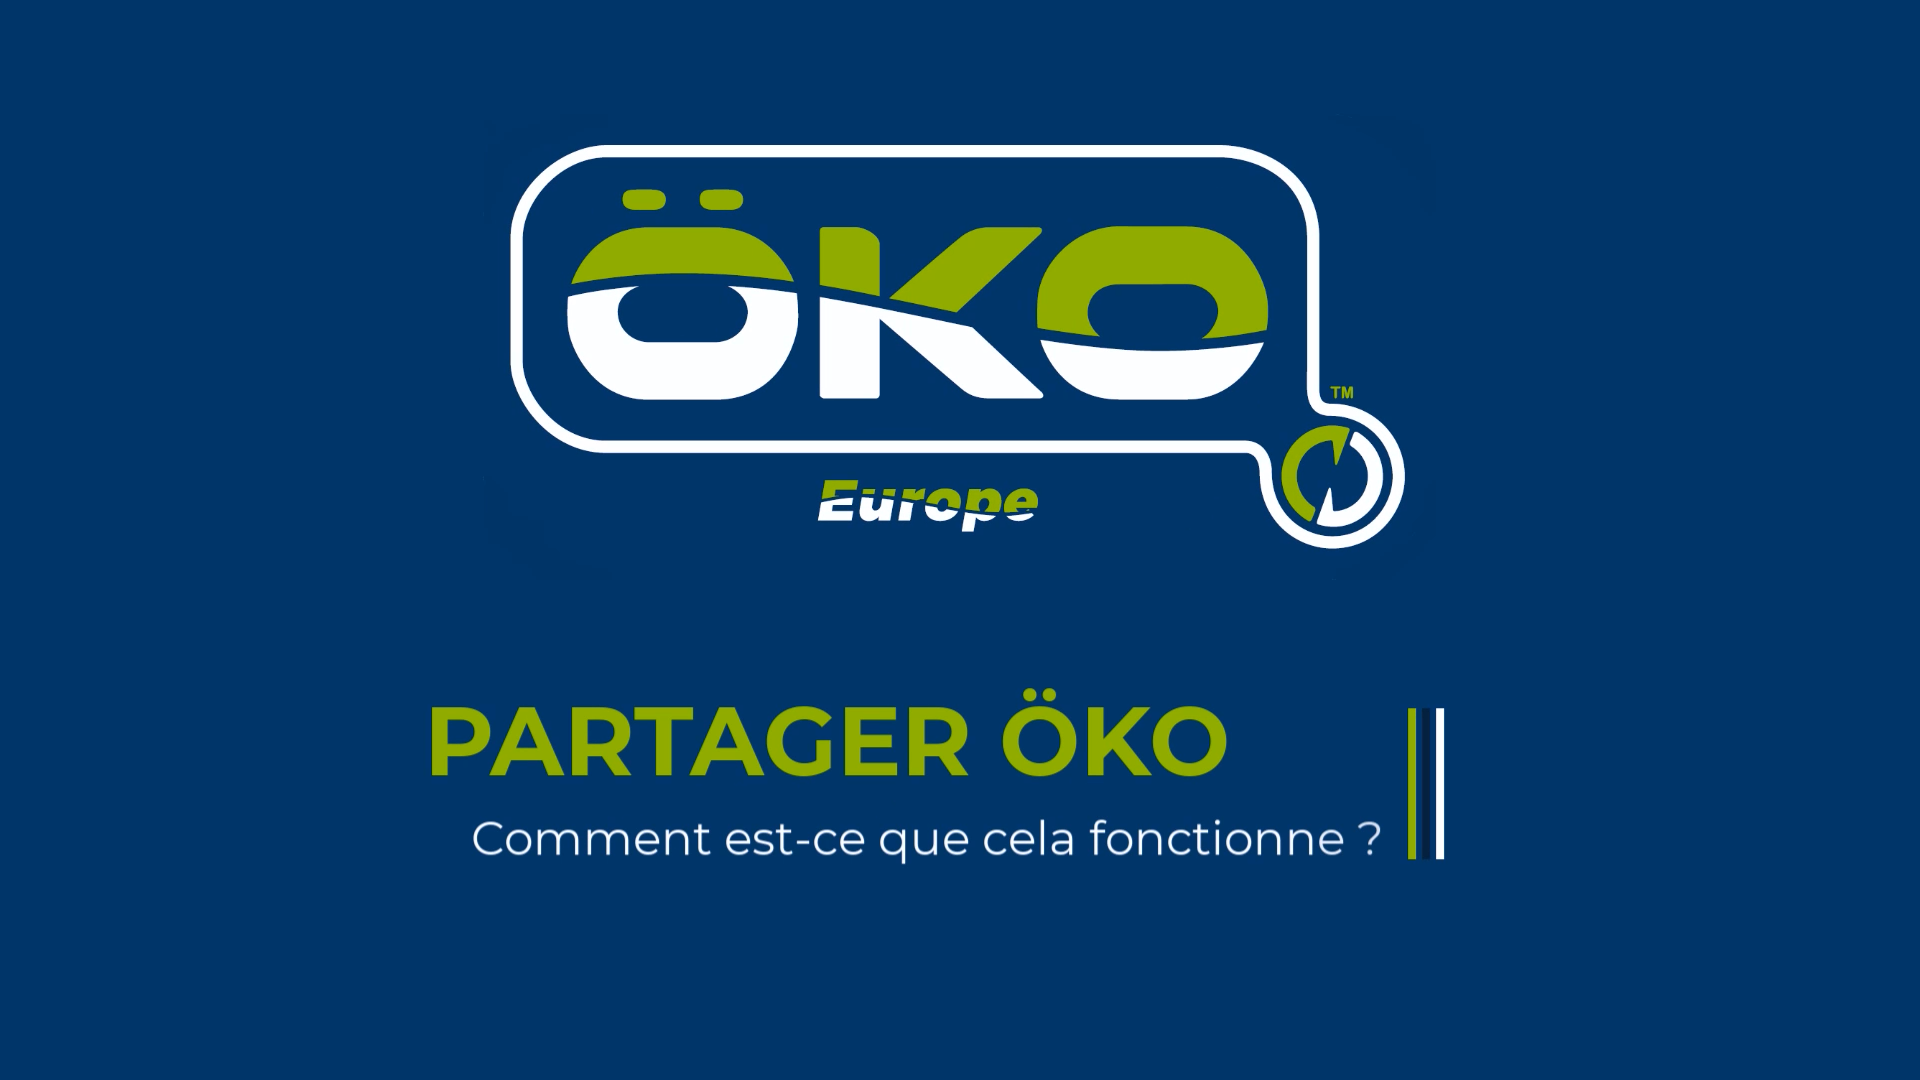 Download video : How the ÖKO EUROPE sharing program works